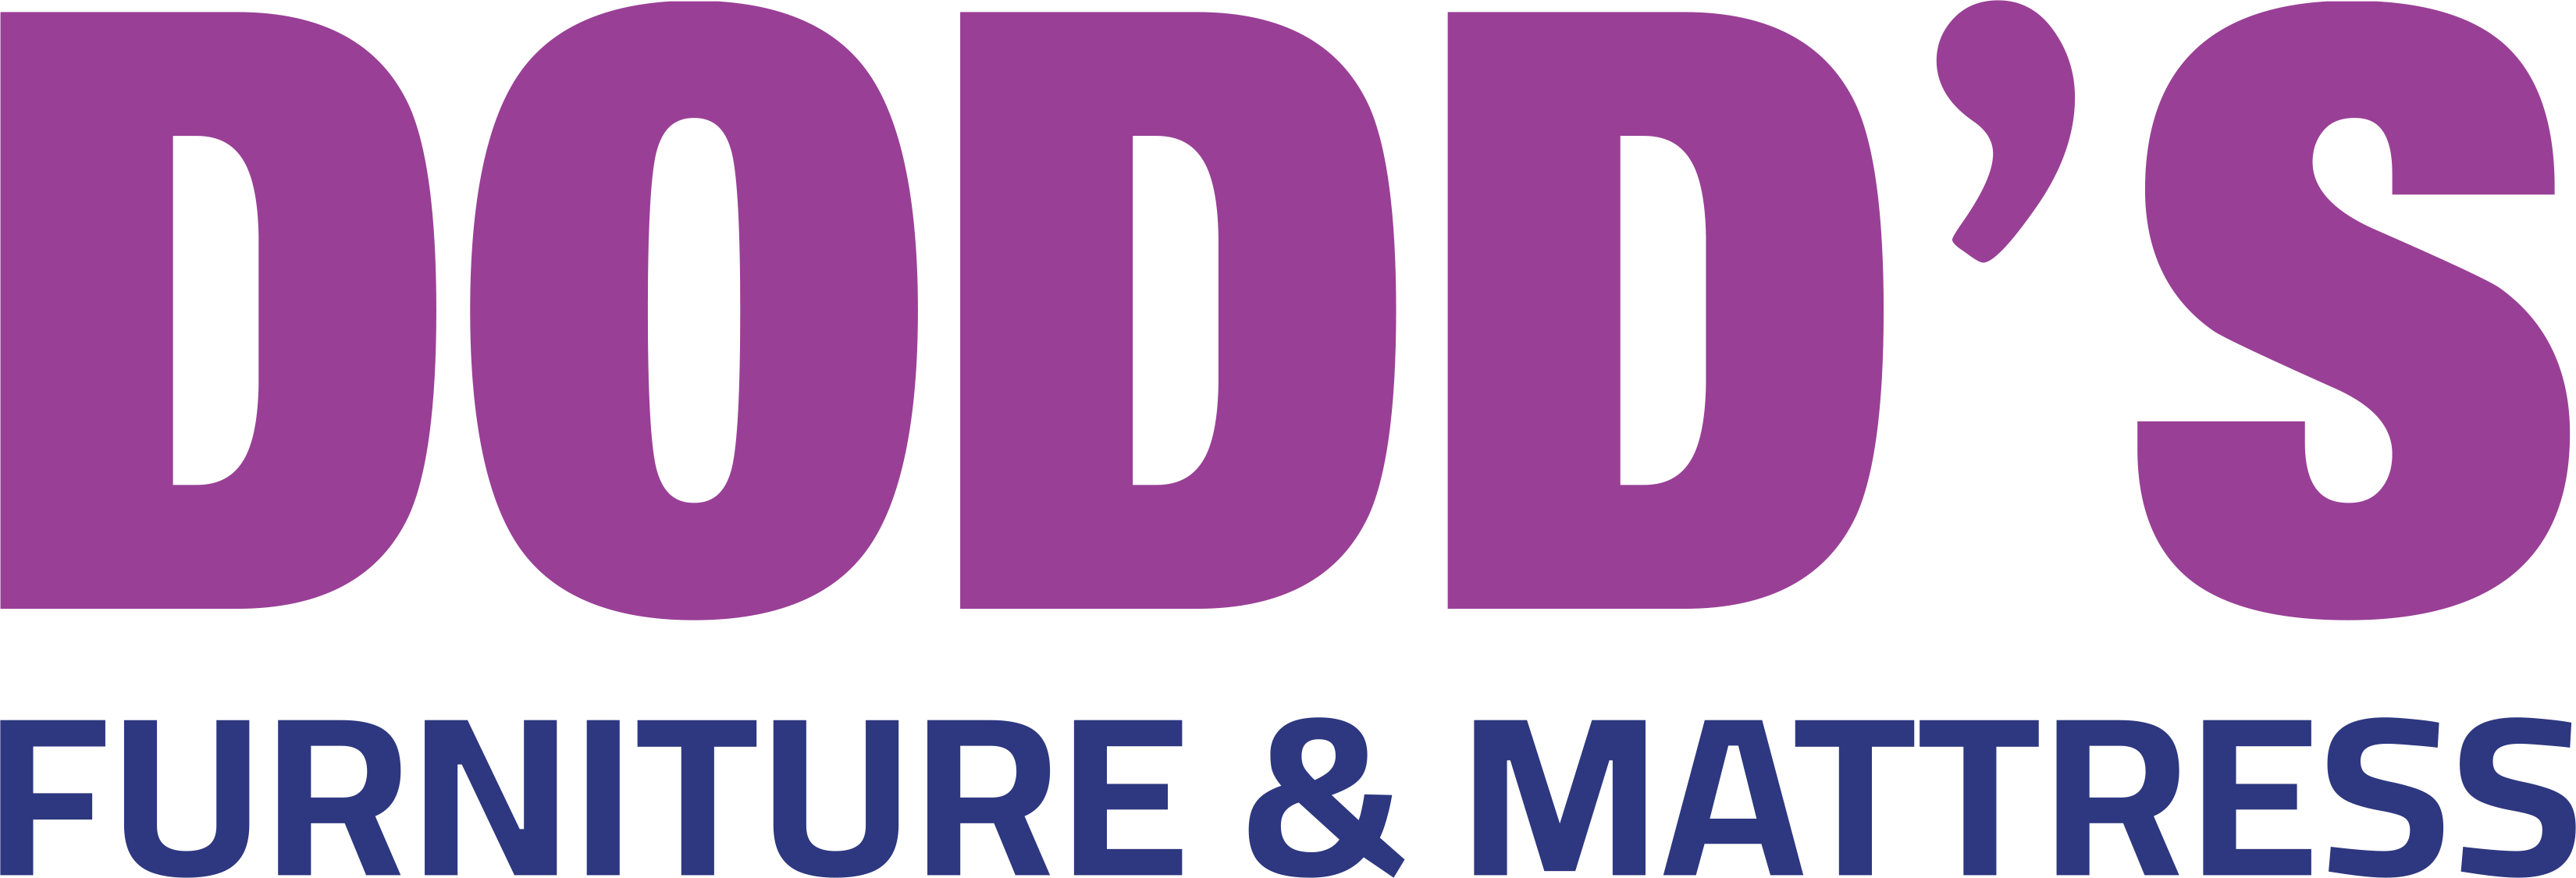 Dodd's Furniture & Mattress